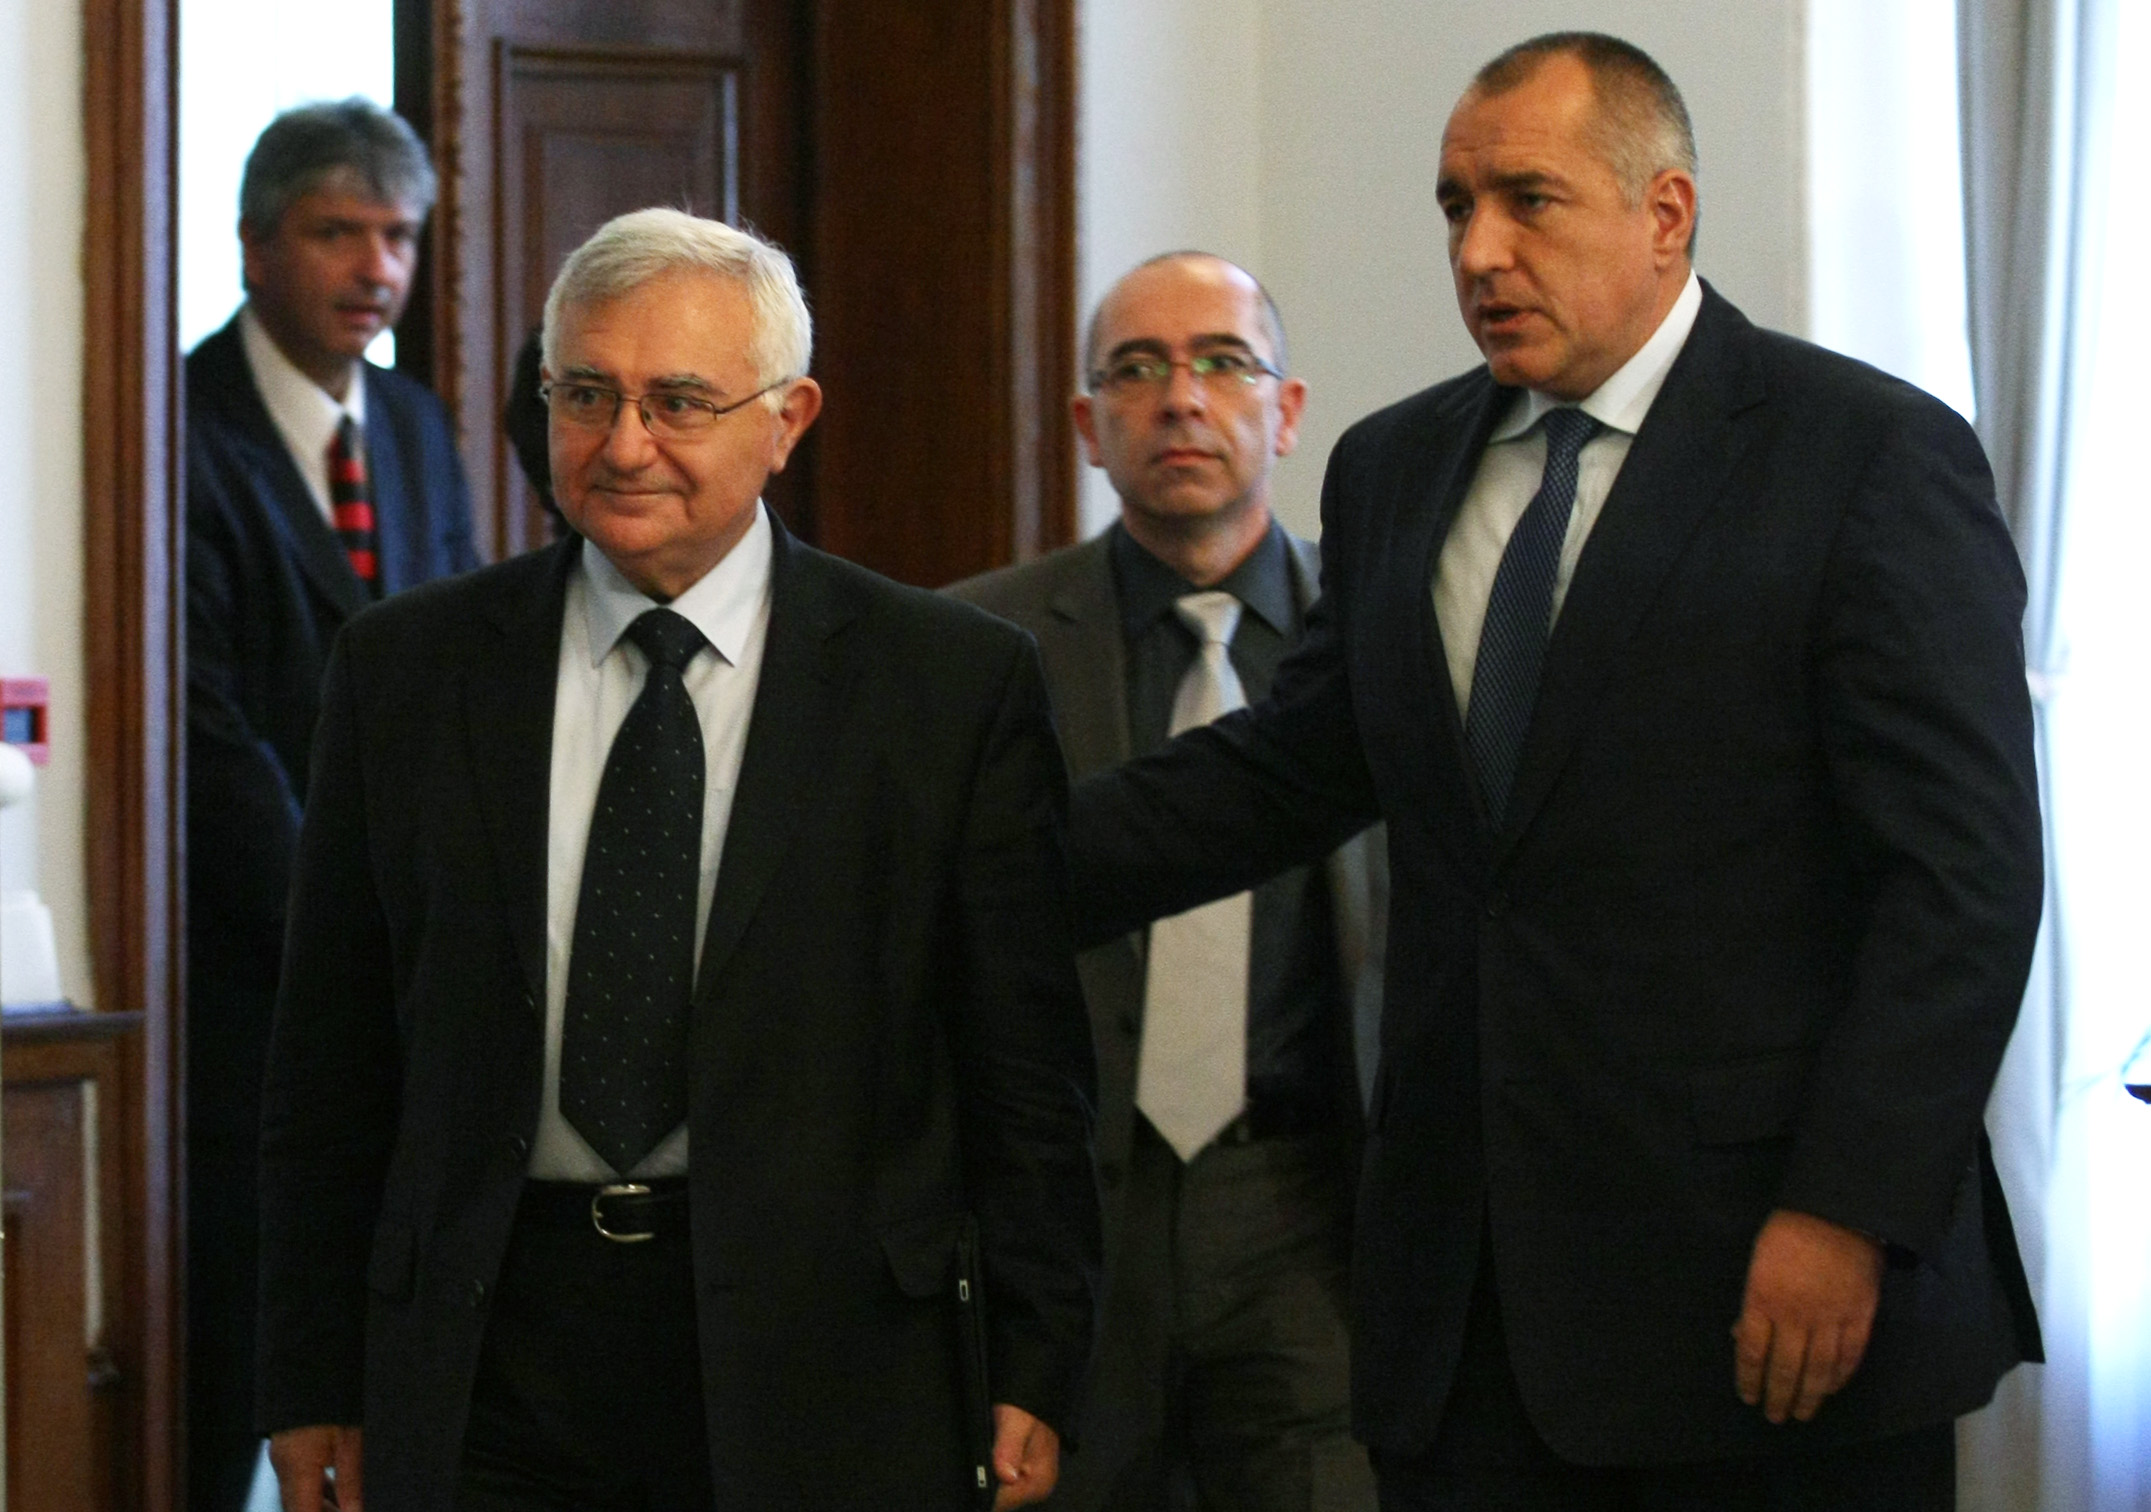 Еврокомисар подаде оставка заради лобистки скандал